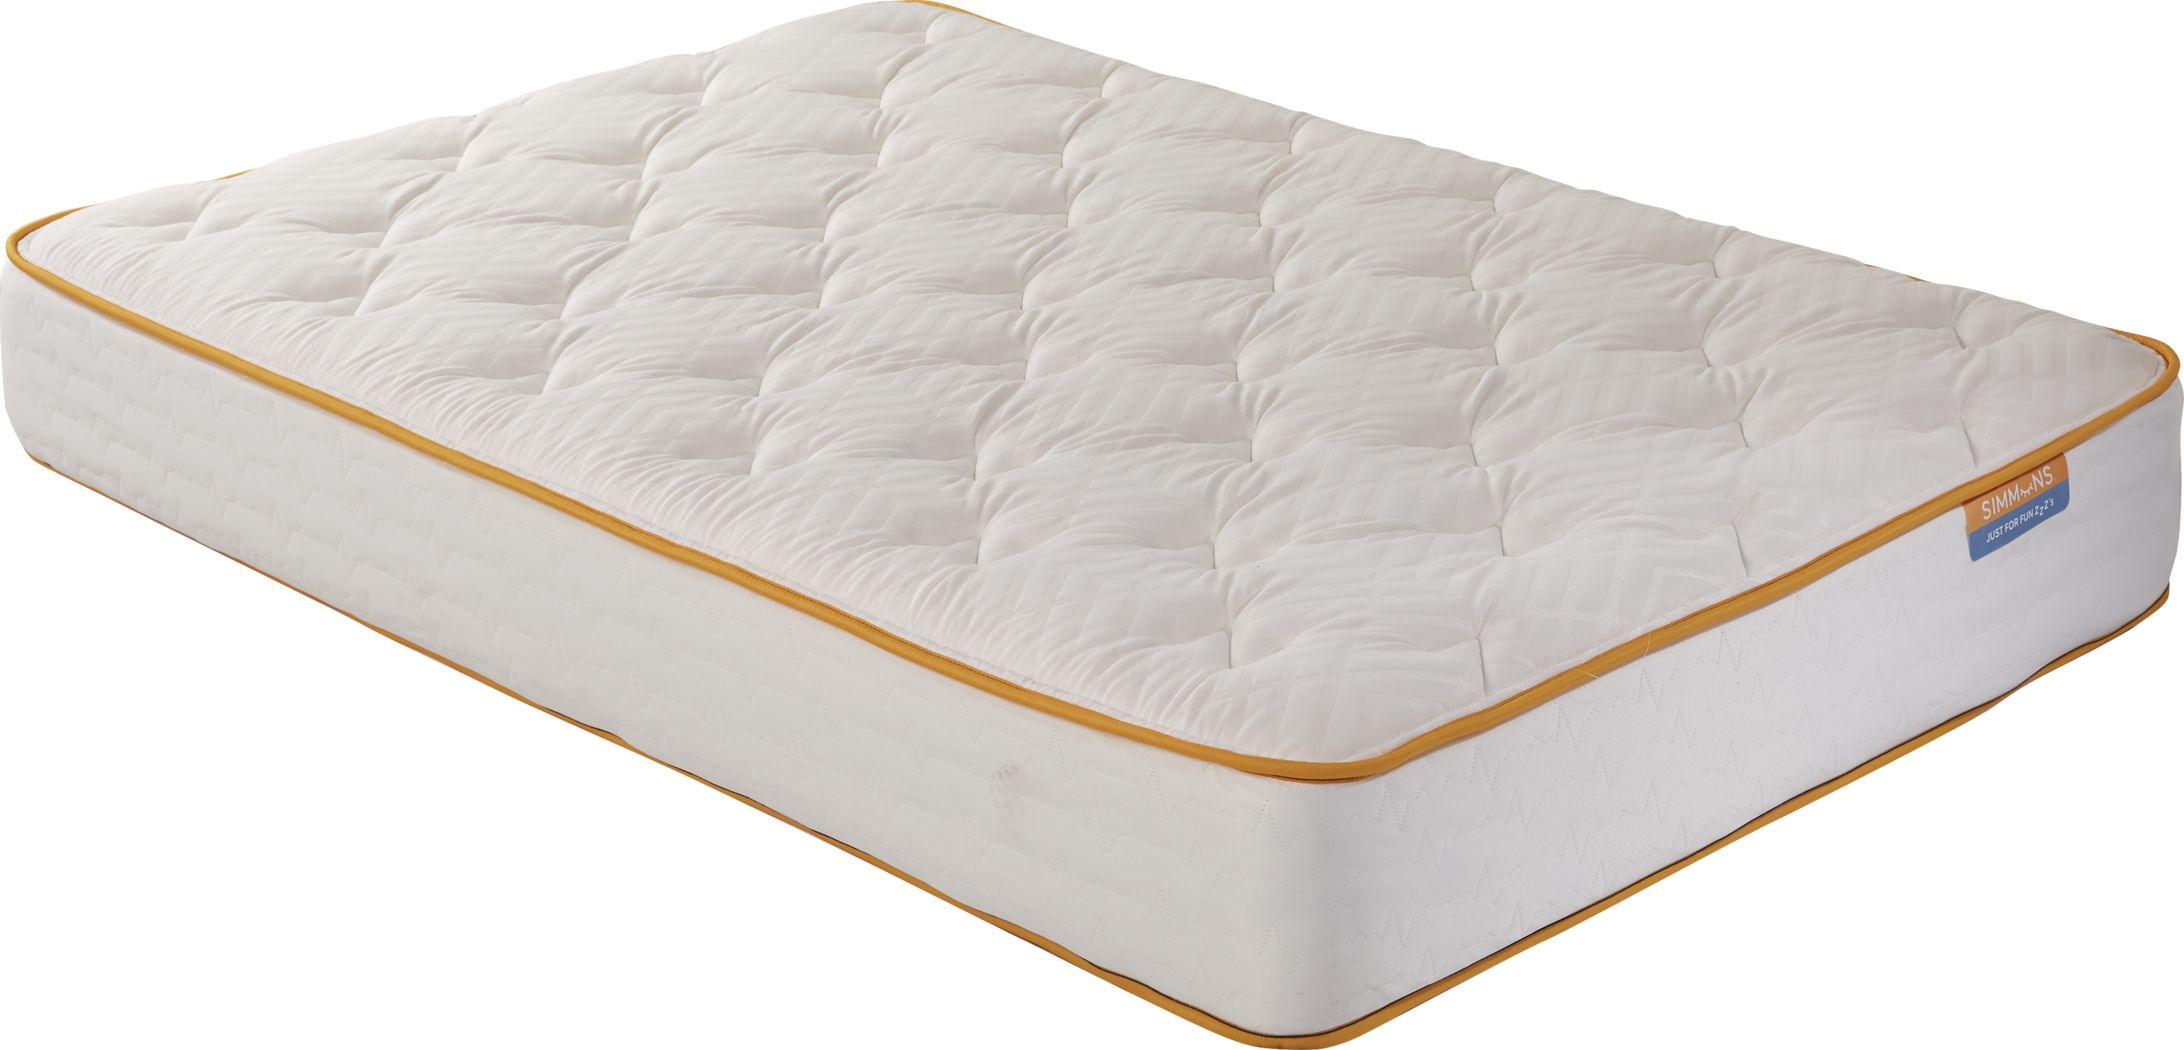 simmons mattress on sale